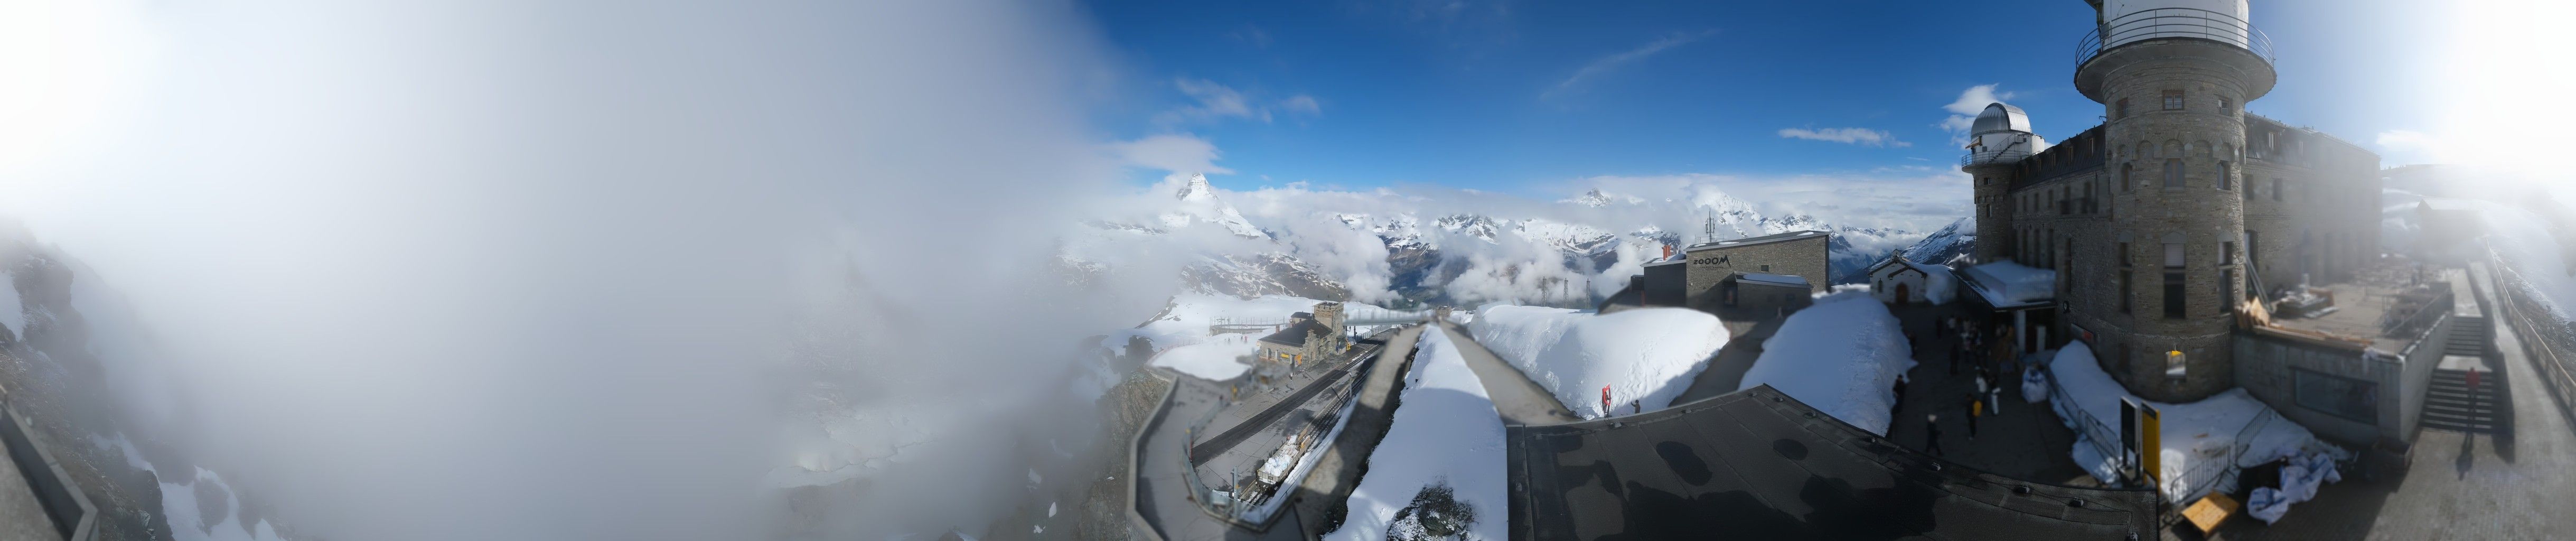 Zermatt: Gornergrat MGB